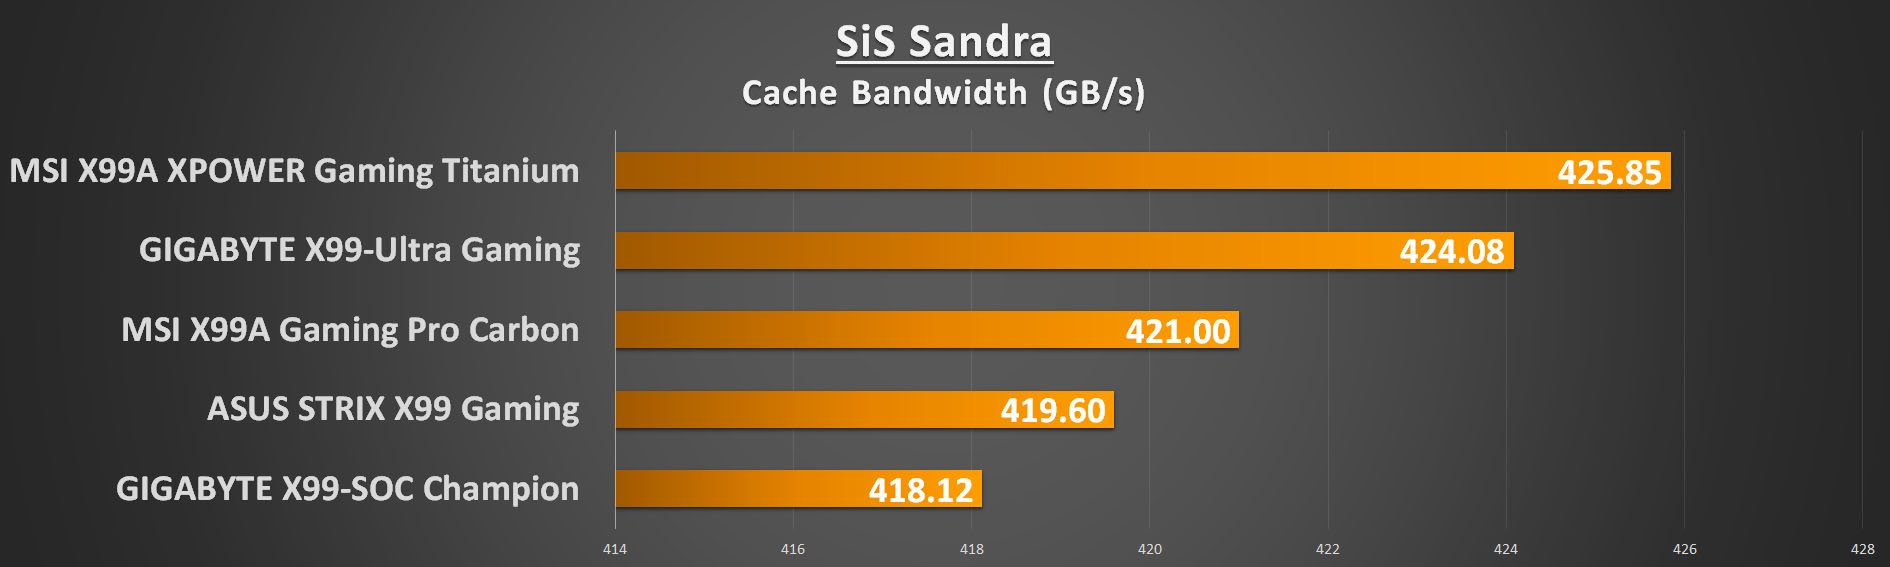 gigabyte-x99-ultra-gaming-sandra-cache-band